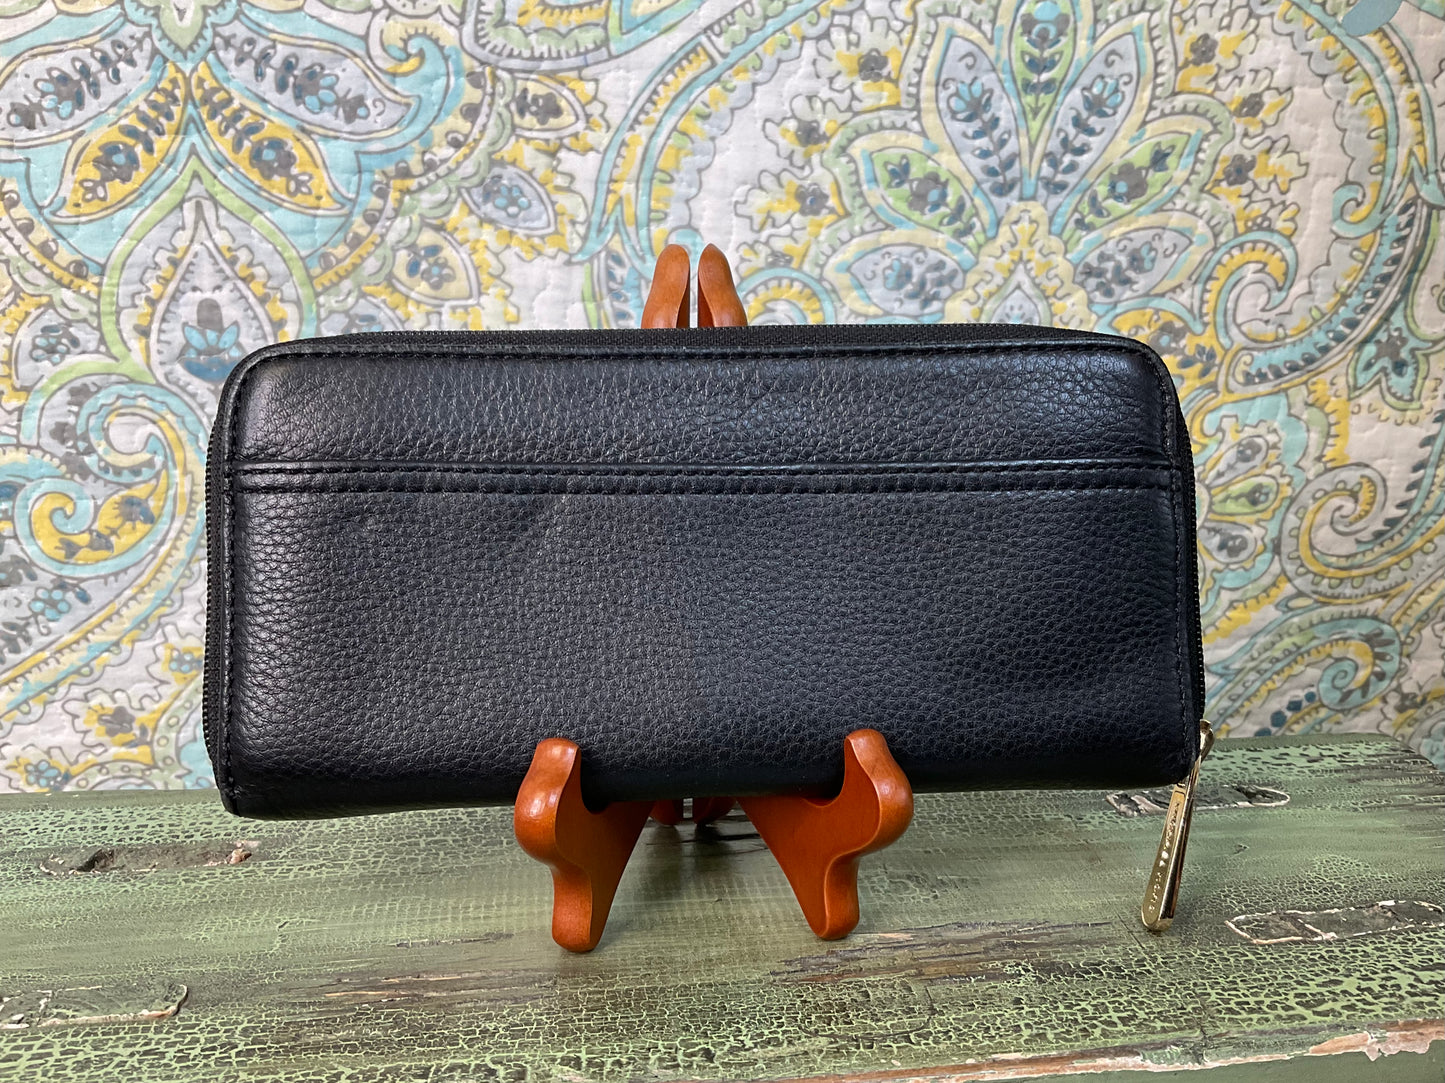 Michael Kors Soft Leather Handbag & Wallet Set